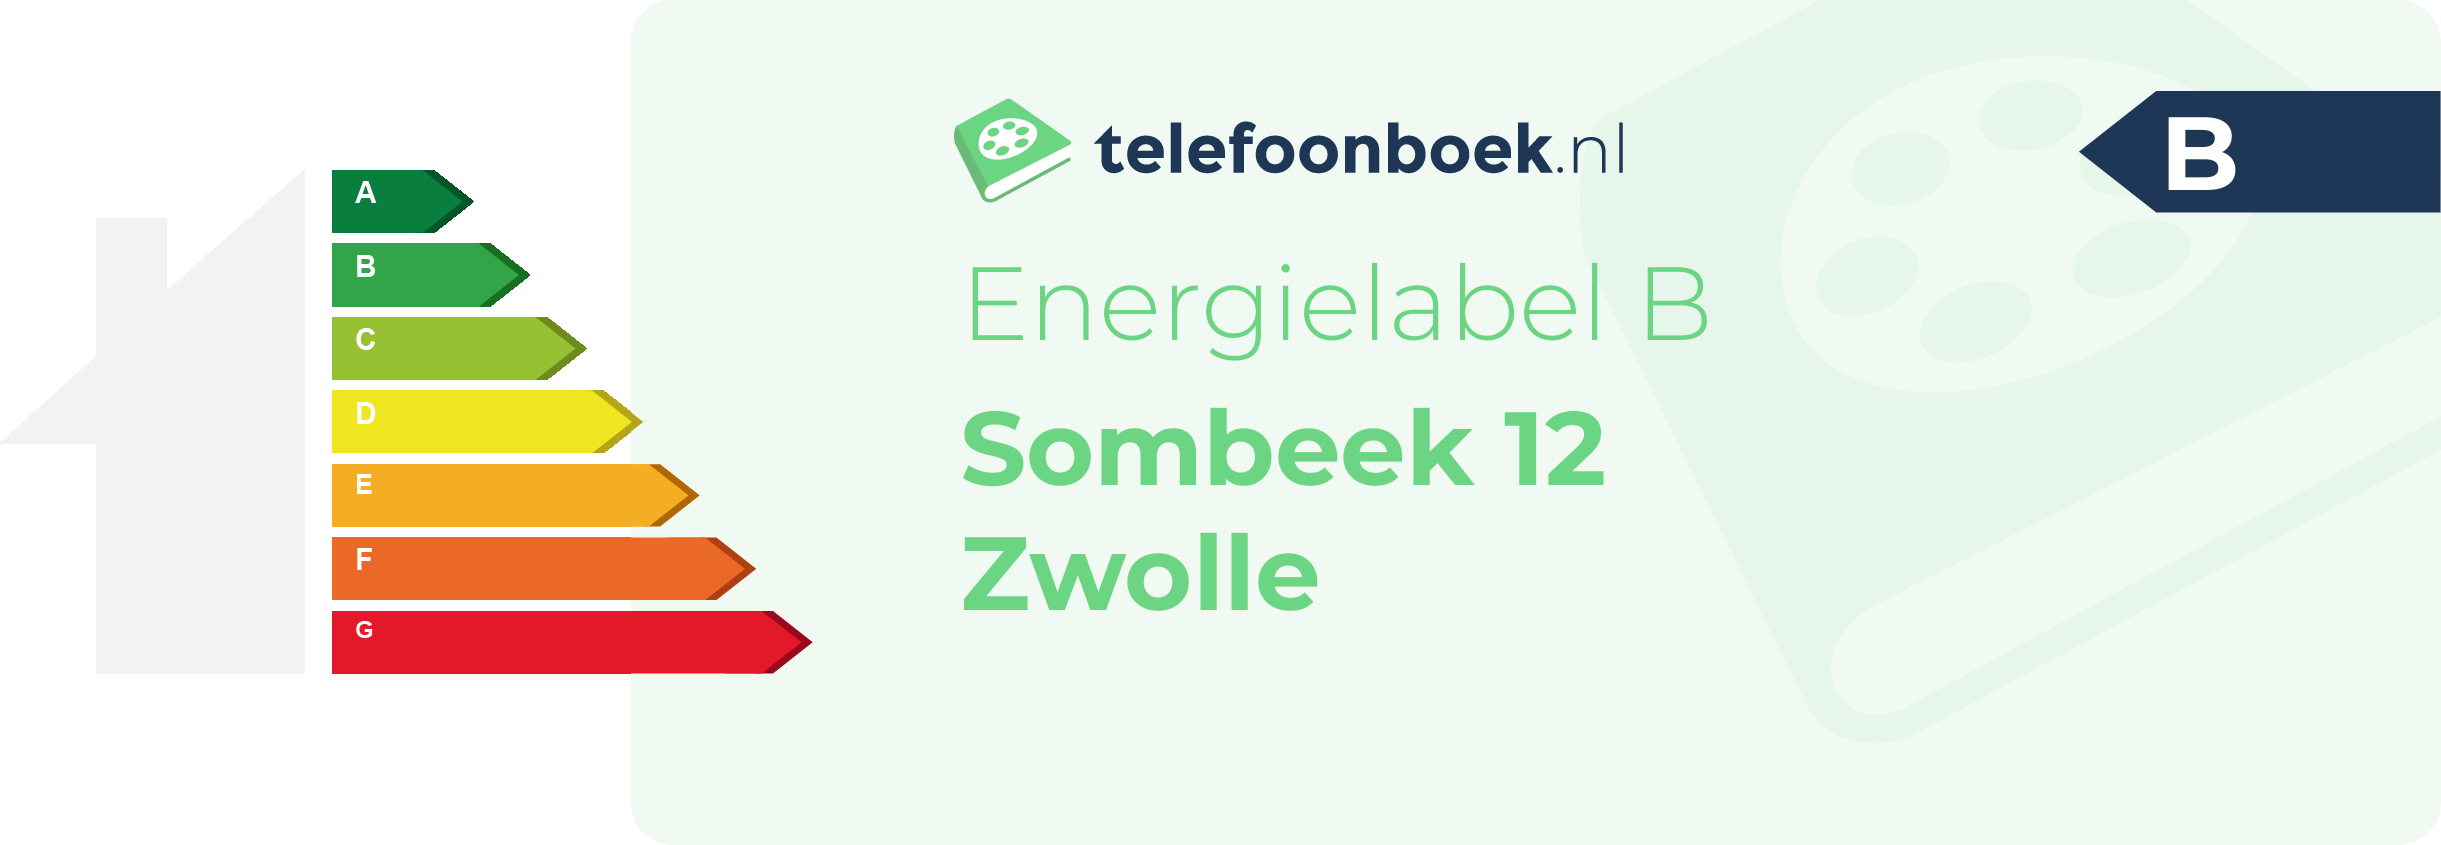 Energielabel Sombeek 12 Zwolle